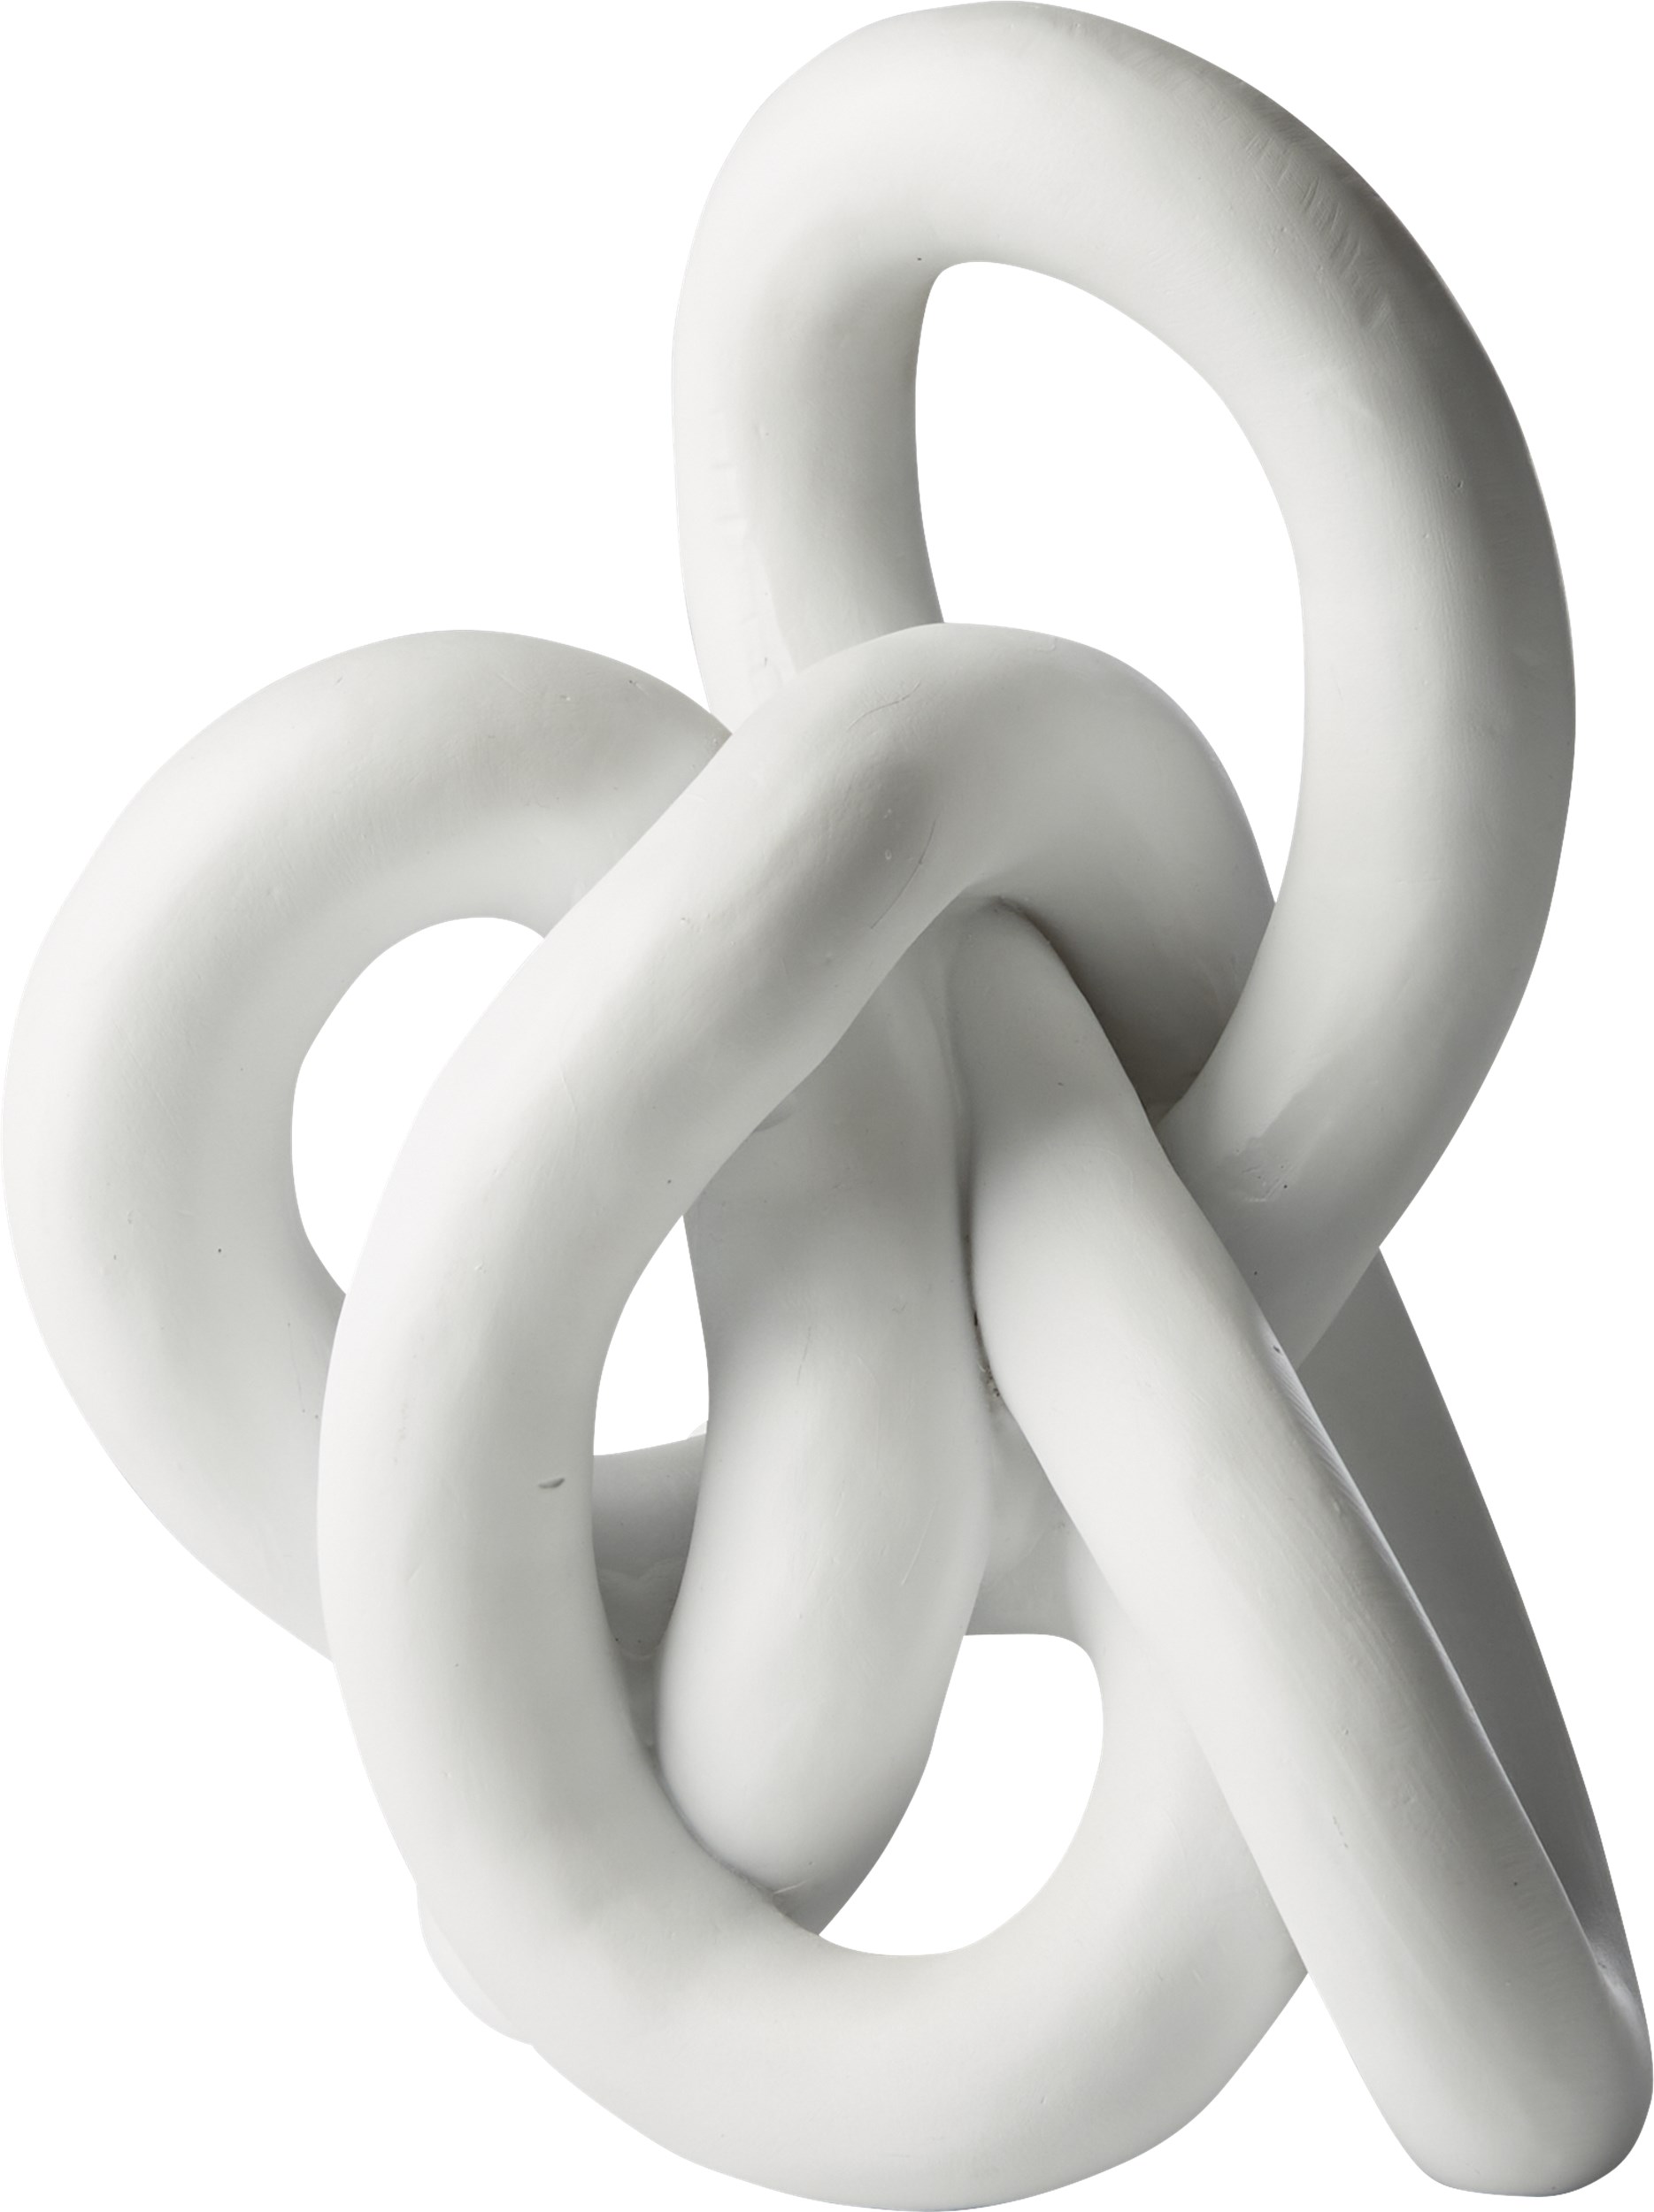 Vili Figur 25 x 18 cm - Offwhite polyresin